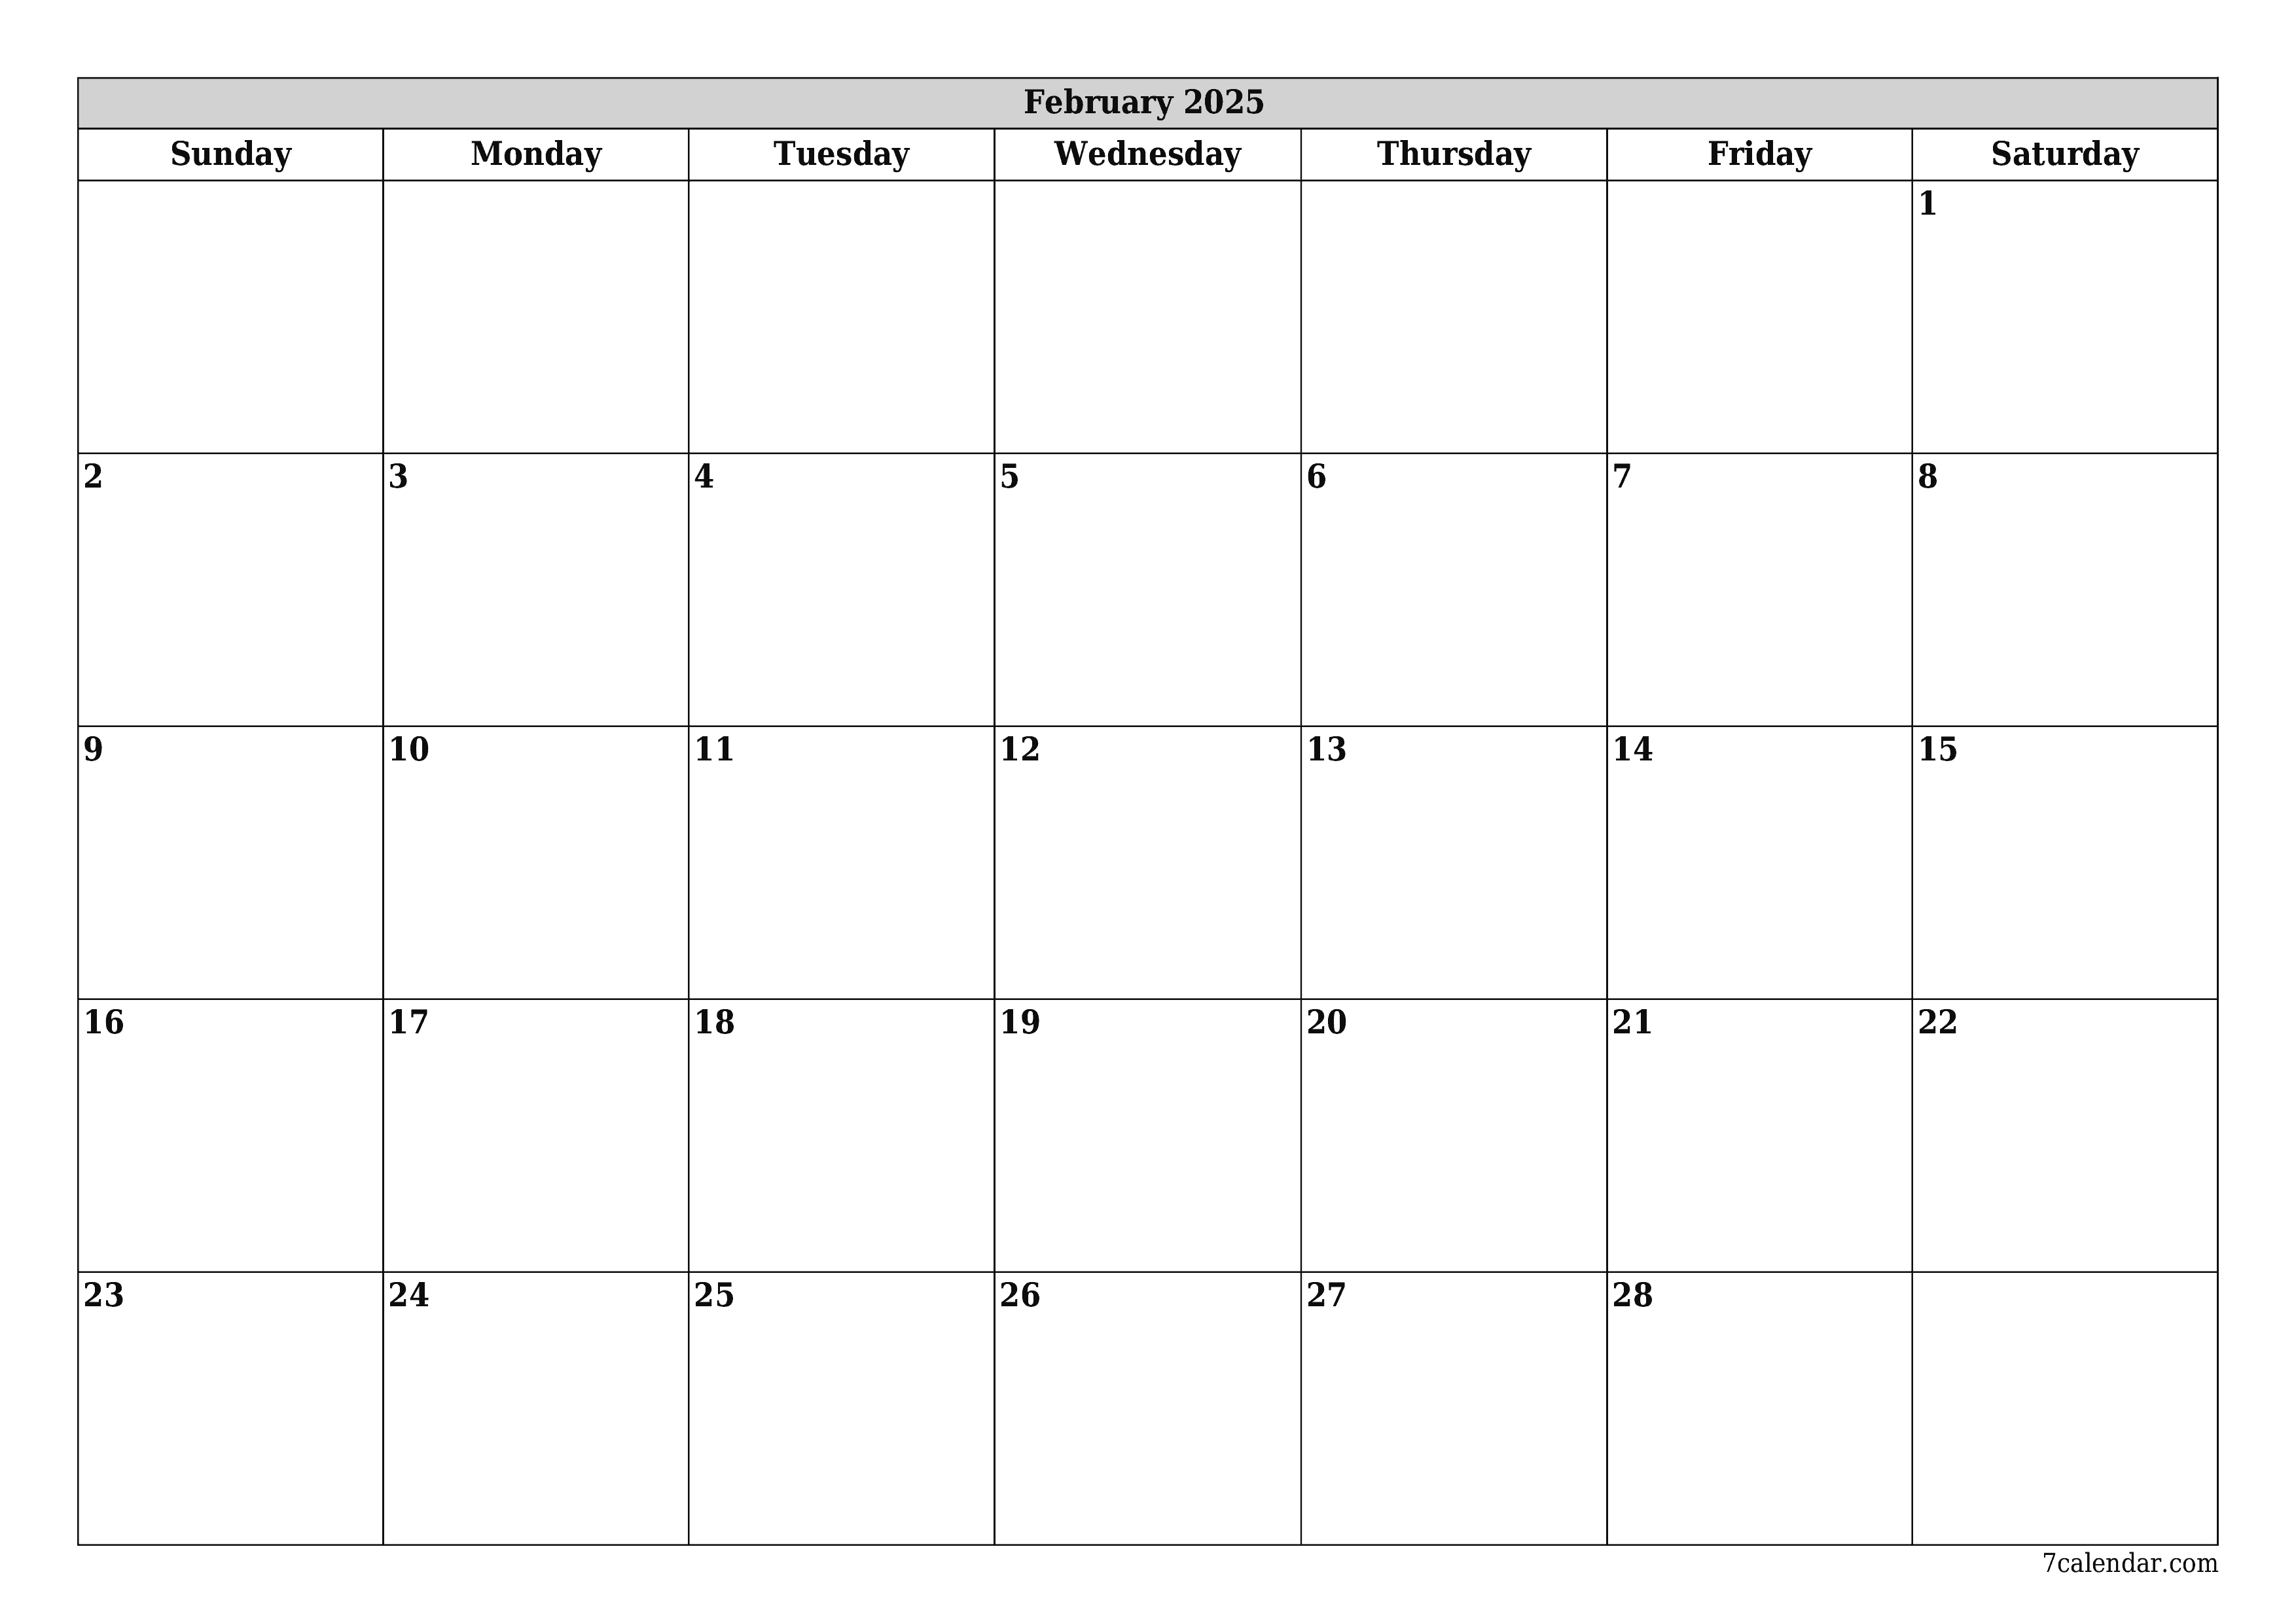 Blank calendar February 2025